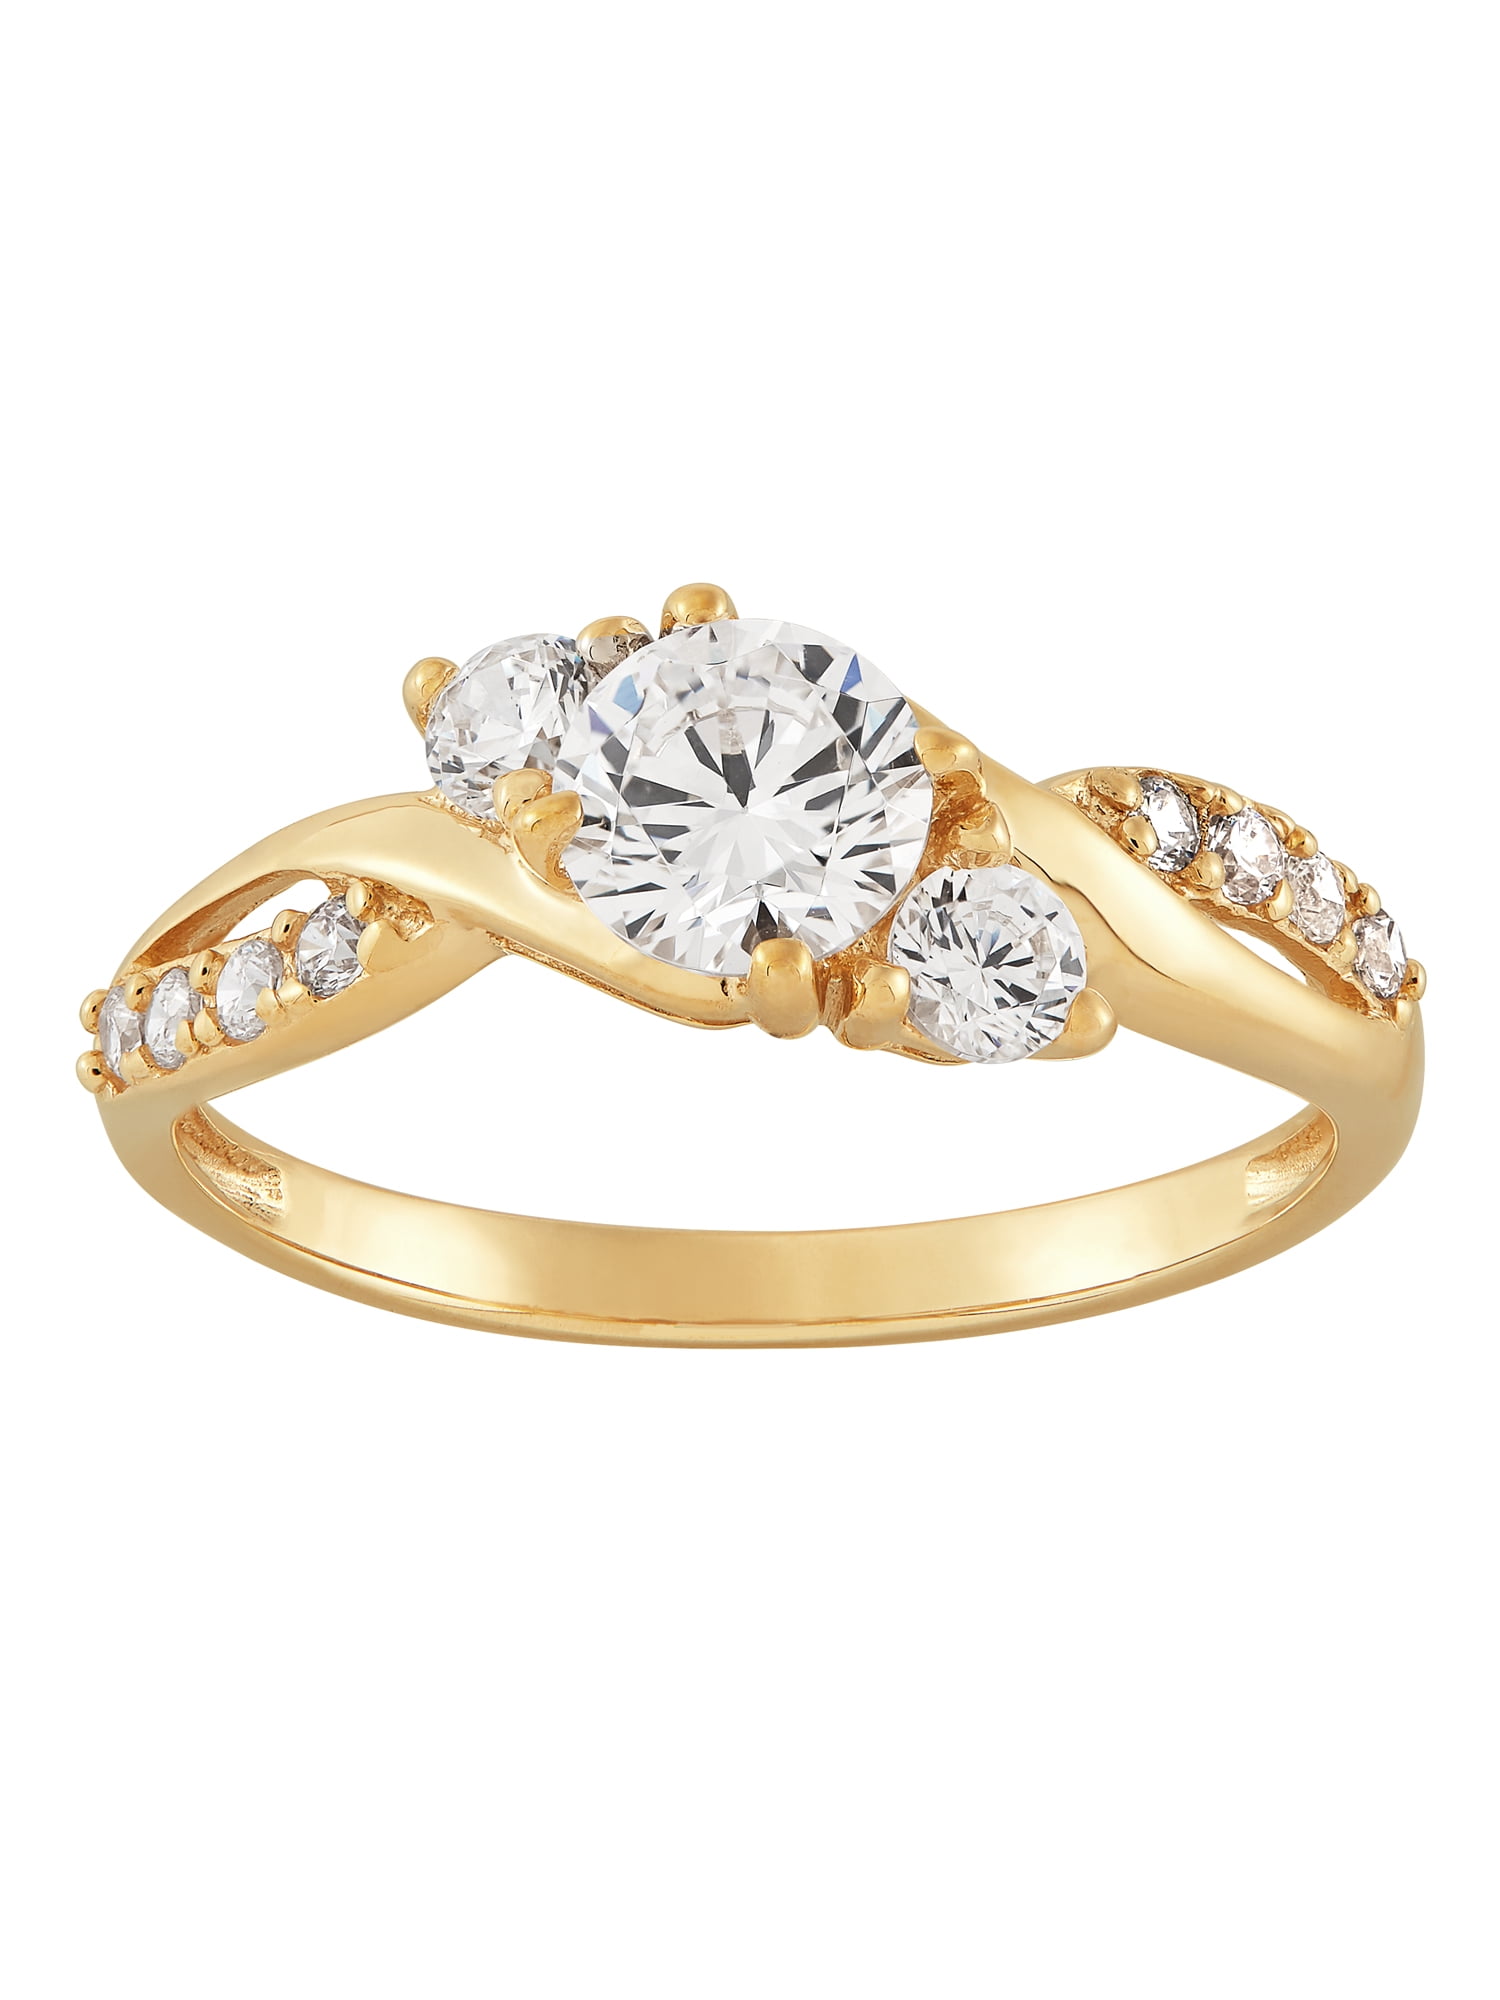 10k or 14k Yellow Gold White CZ Sparkling Design Ladies Wedding Anniversary Ring